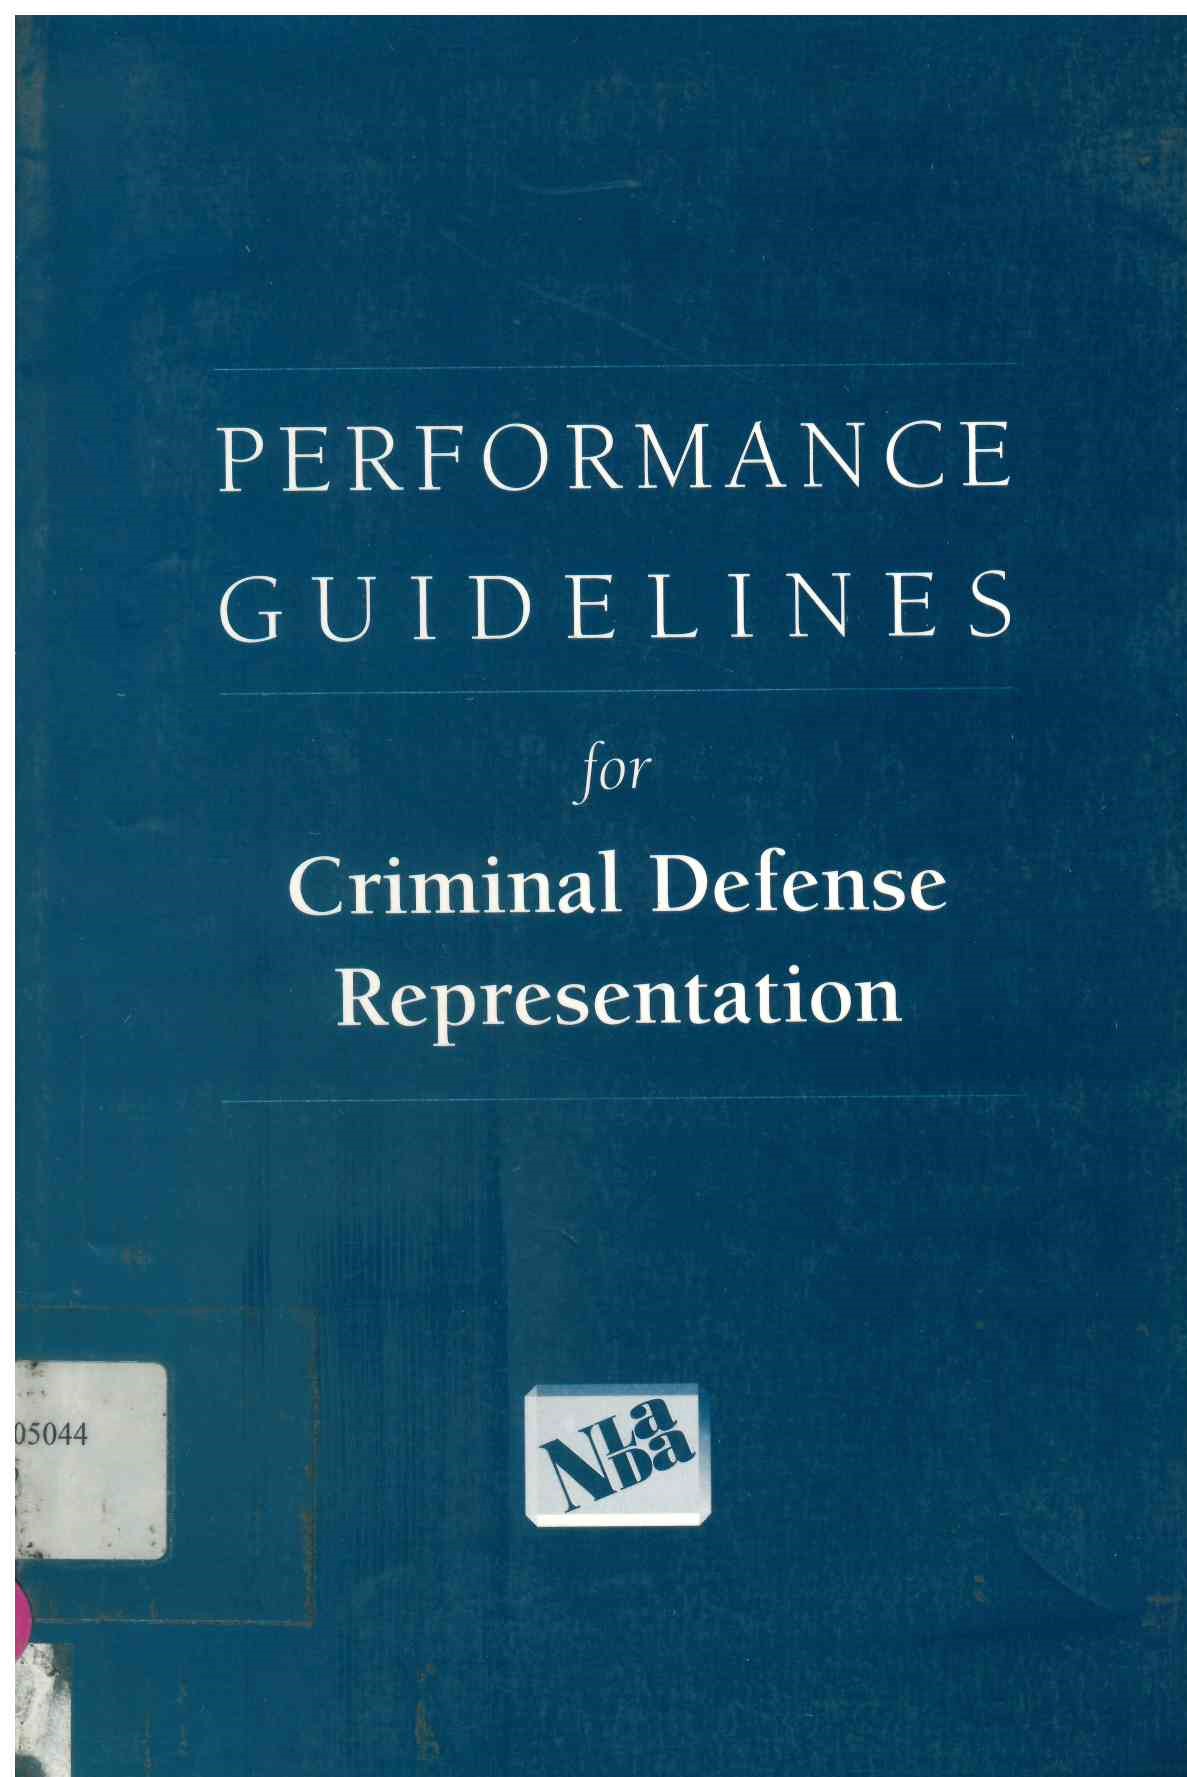 Performance guidelines for criminal defense representation